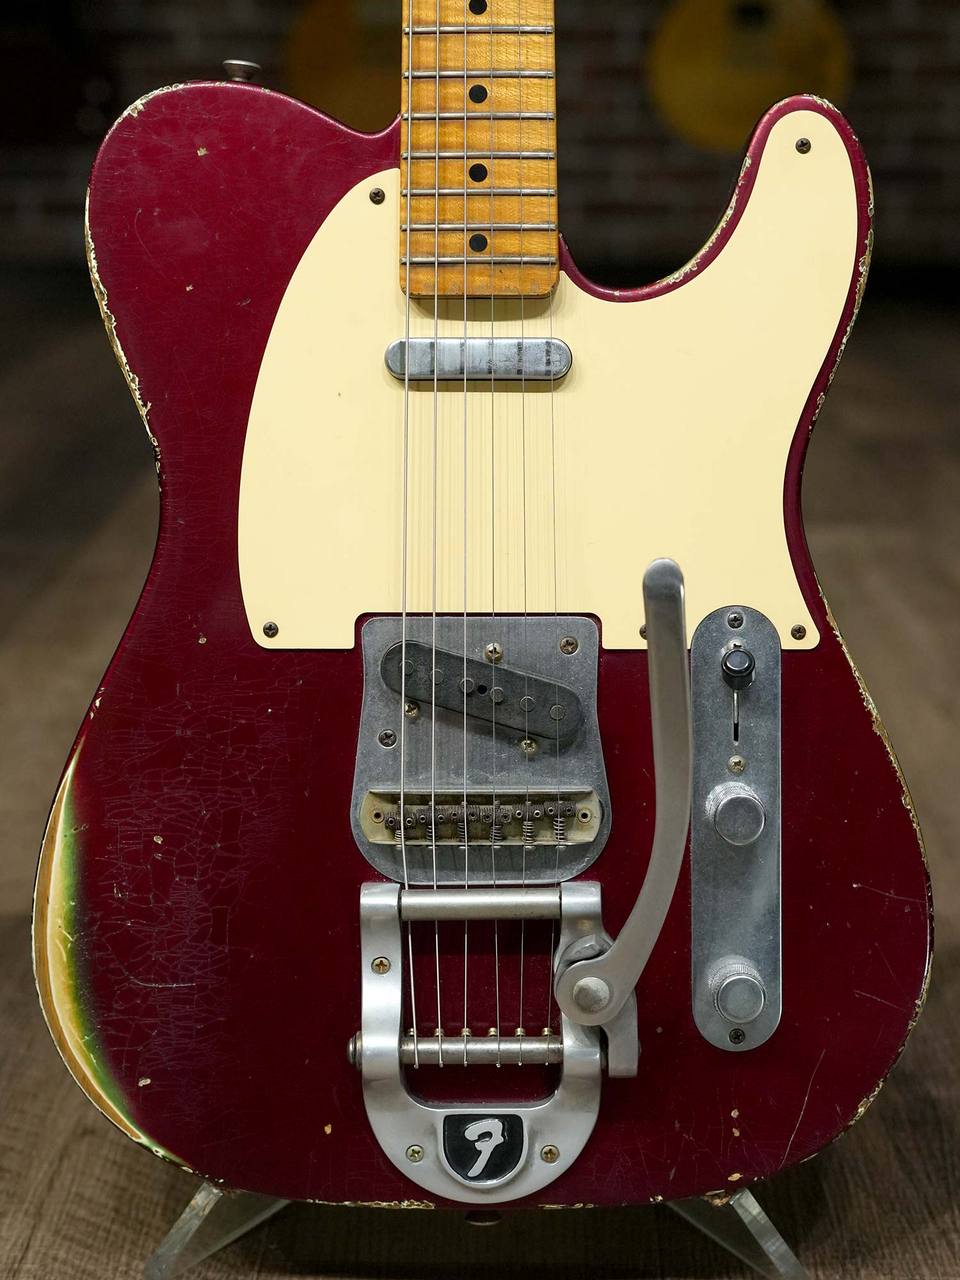 FENDER 【メンテ済】Fender Custom Shop Master Built LTD 50s Telecaster Relic Bigsby Vintage White by Yuriy Shishkov 月末価格30日まで♪HG